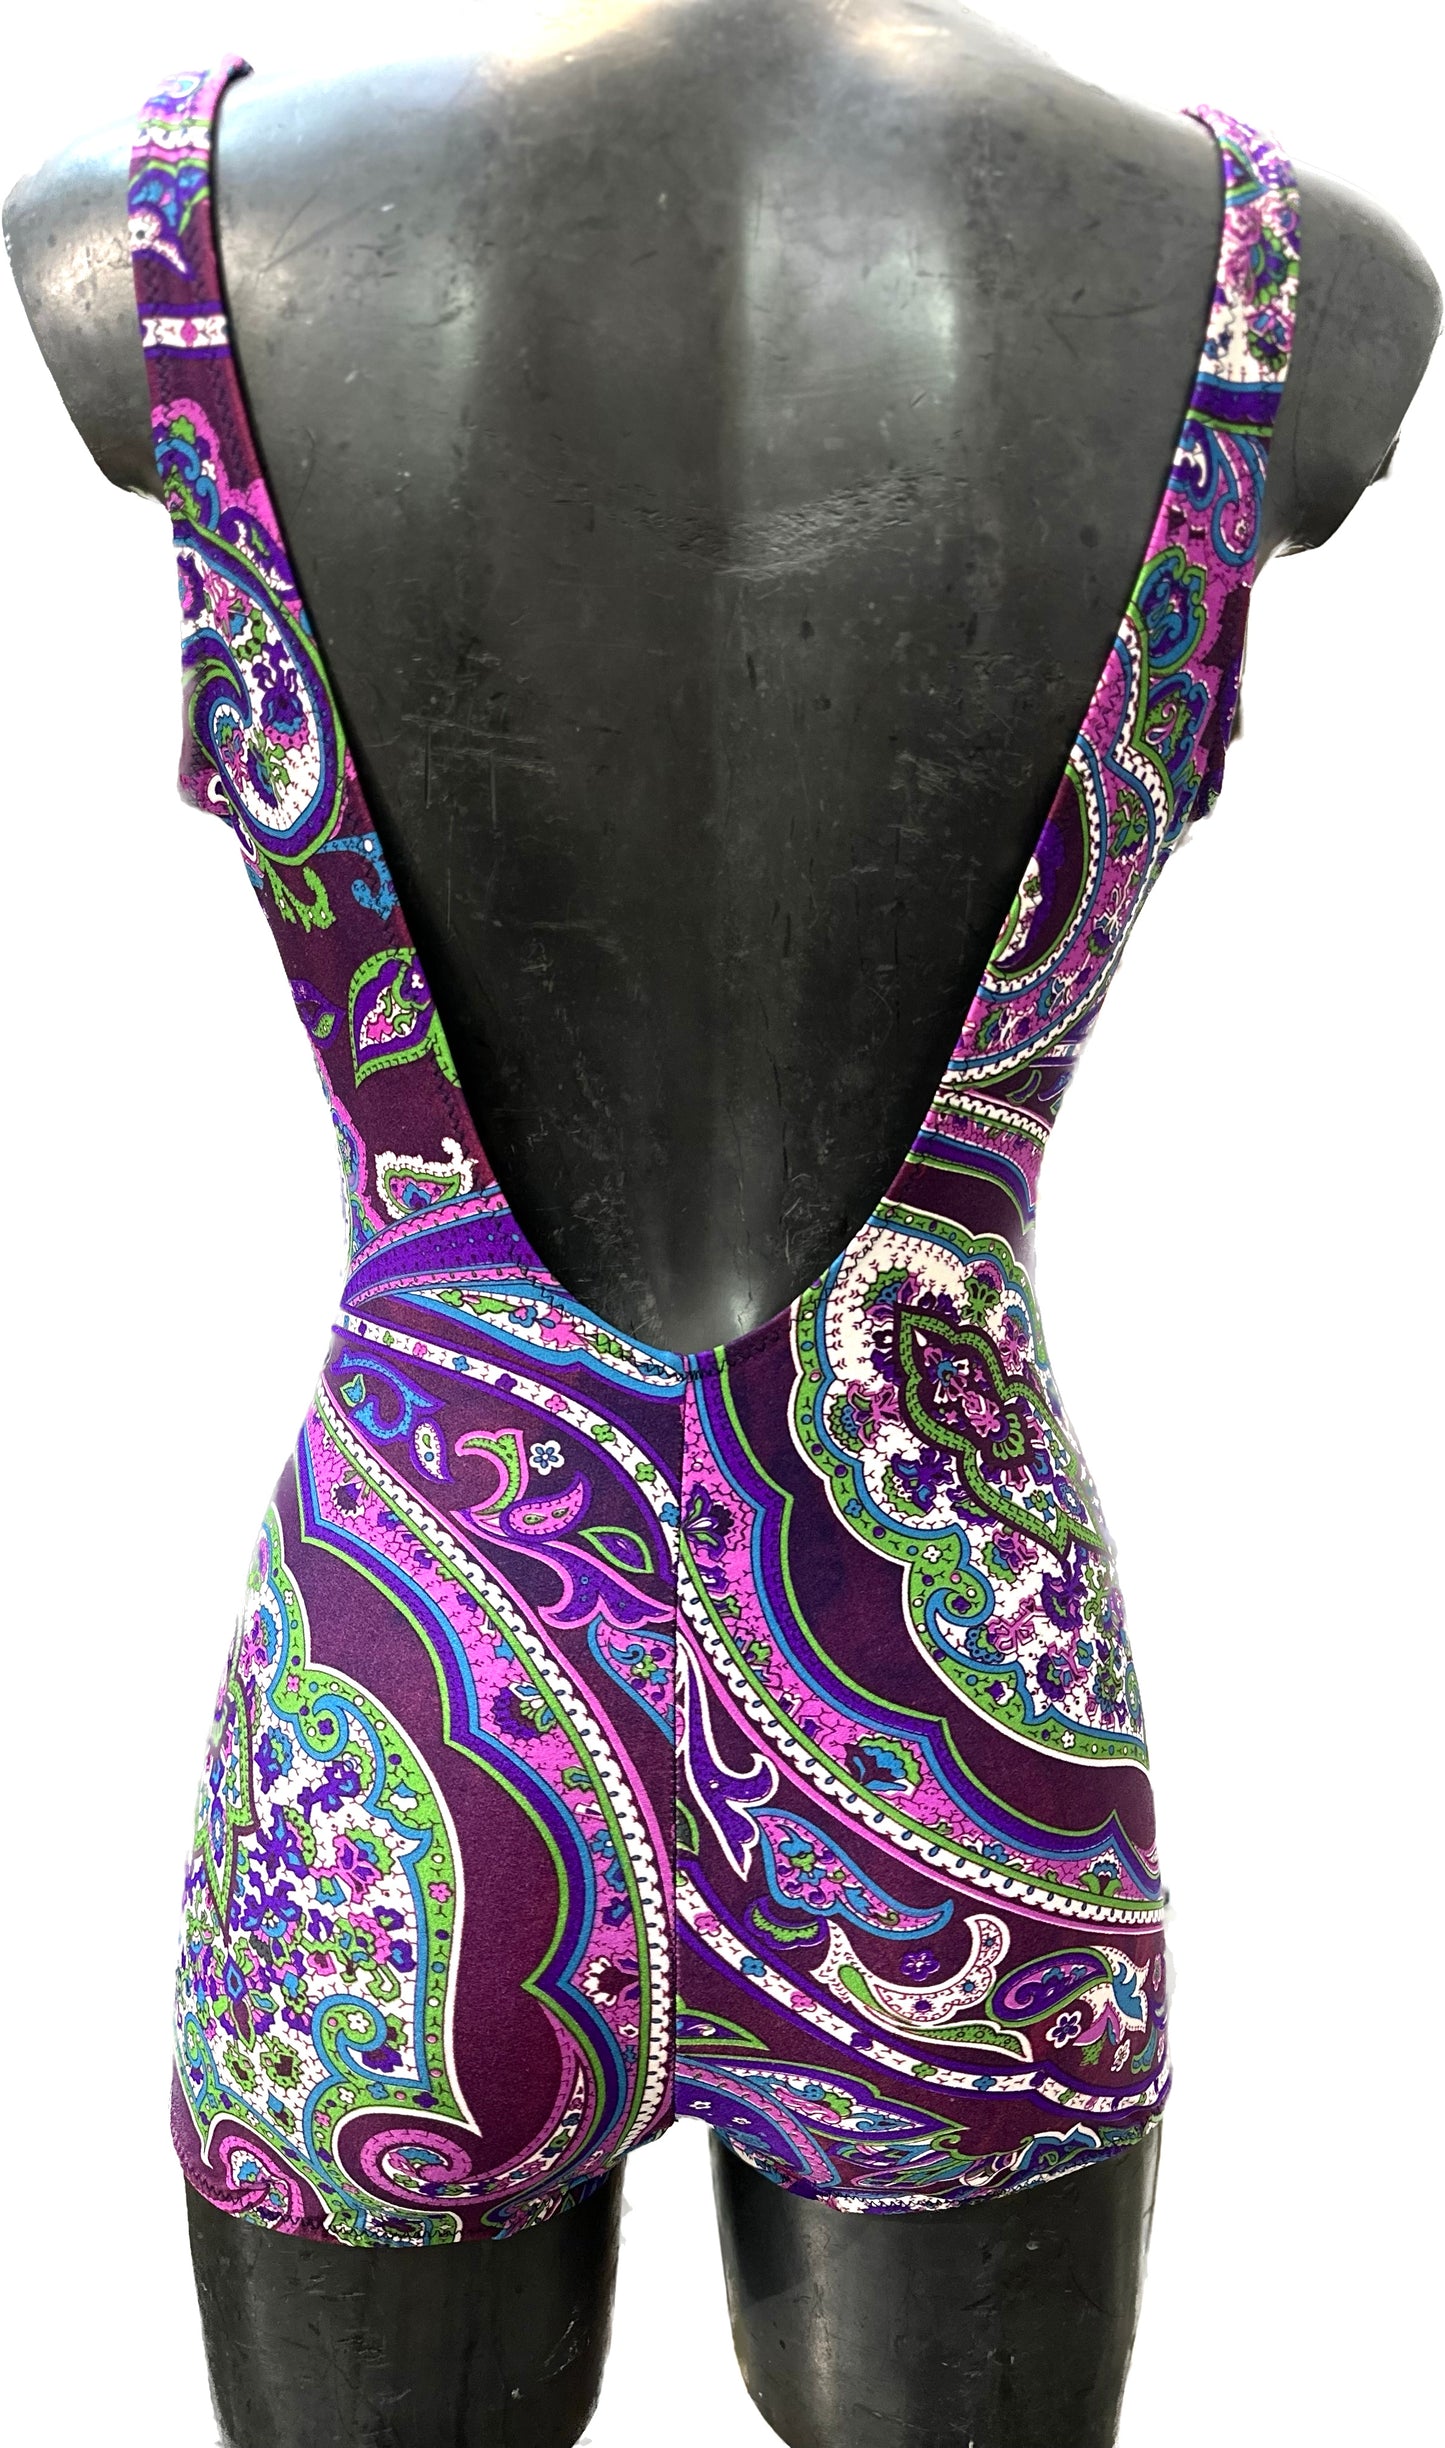 1970s NoS Purple / Green paisley swimsuit, cool skirt pattern, mint sz 42/44